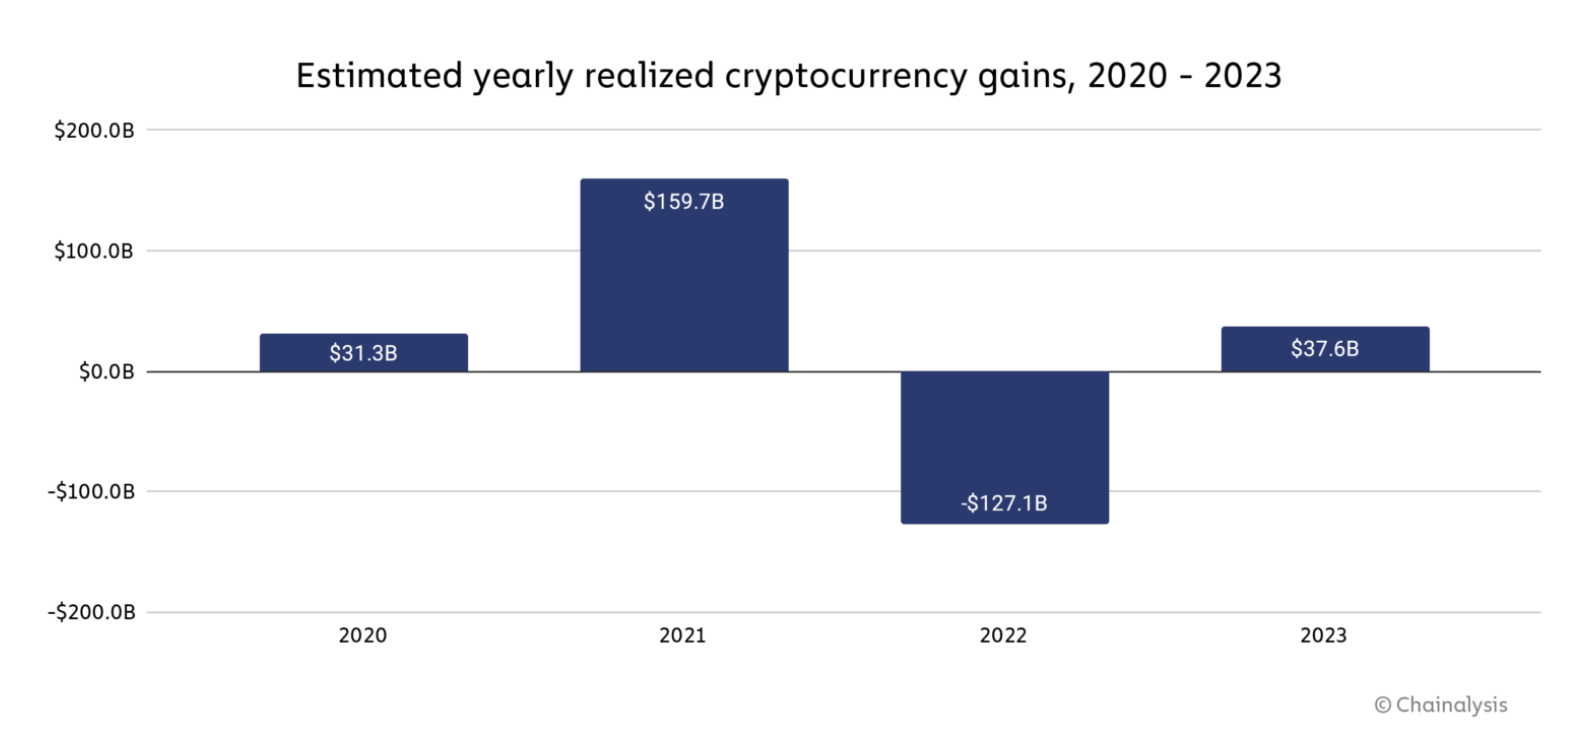 Estimated realized crypto gains